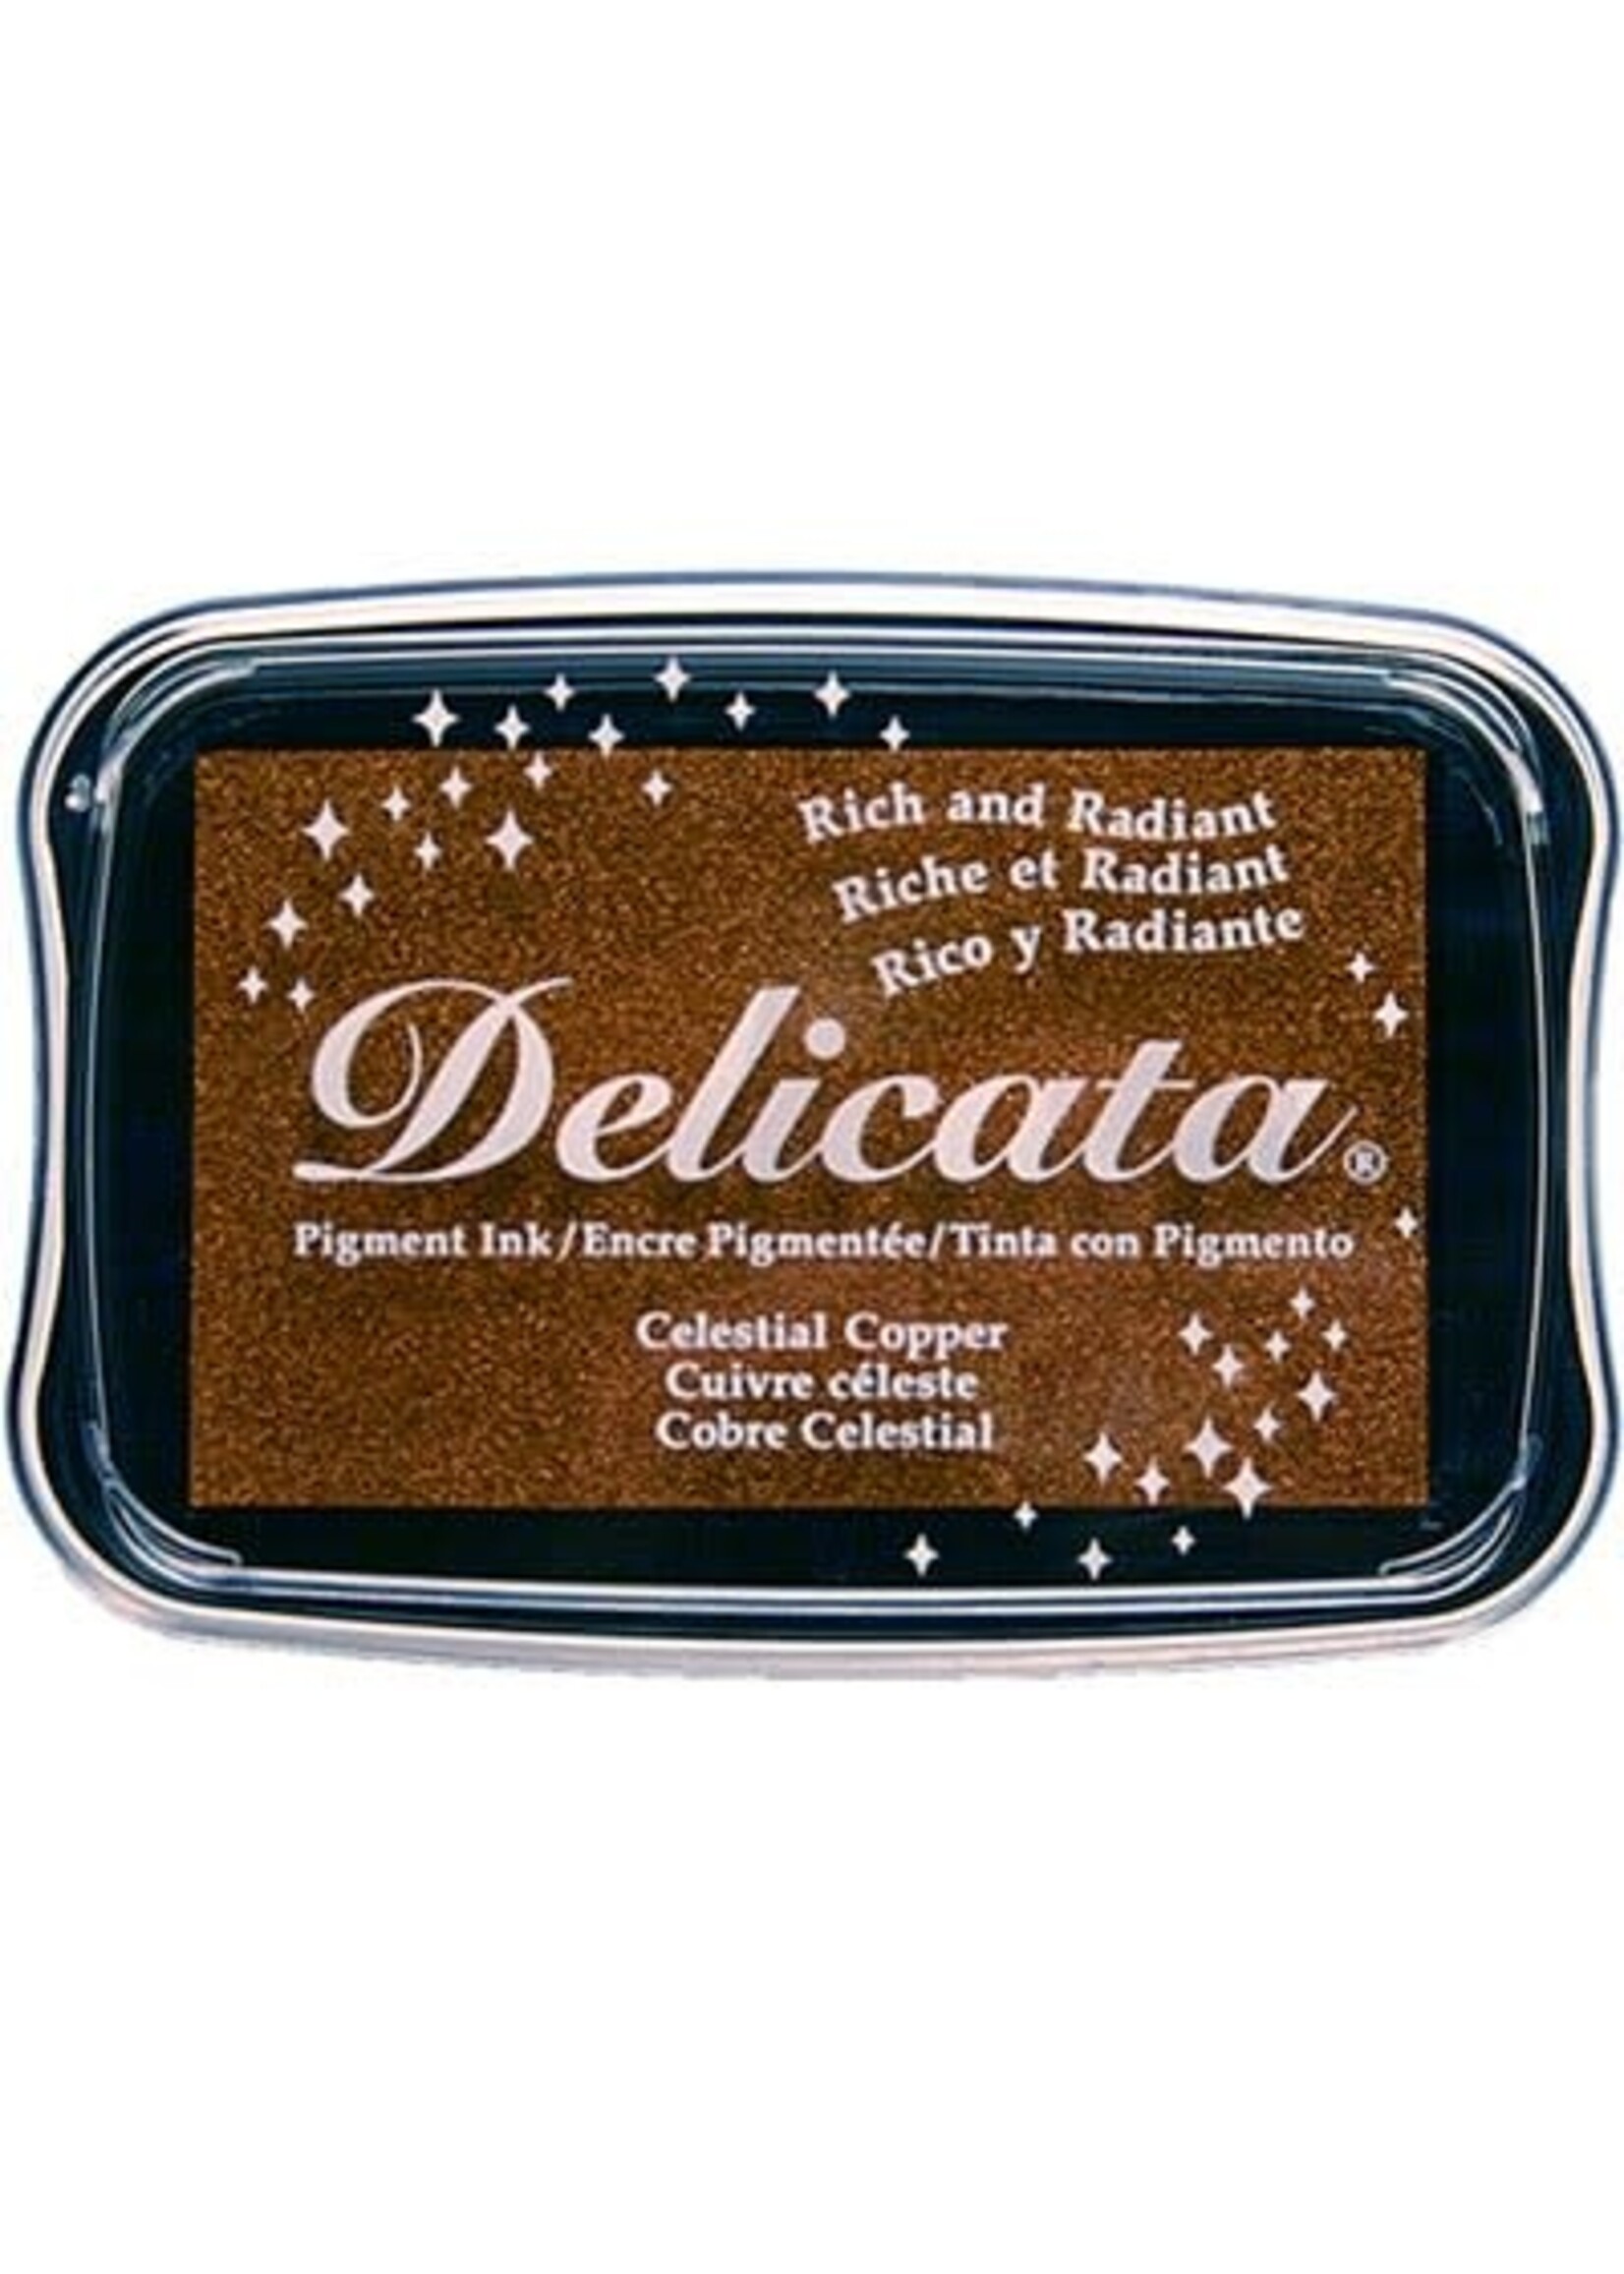 Tsukineko Delicata DE-000-193 - Celestial Copper Inkpad